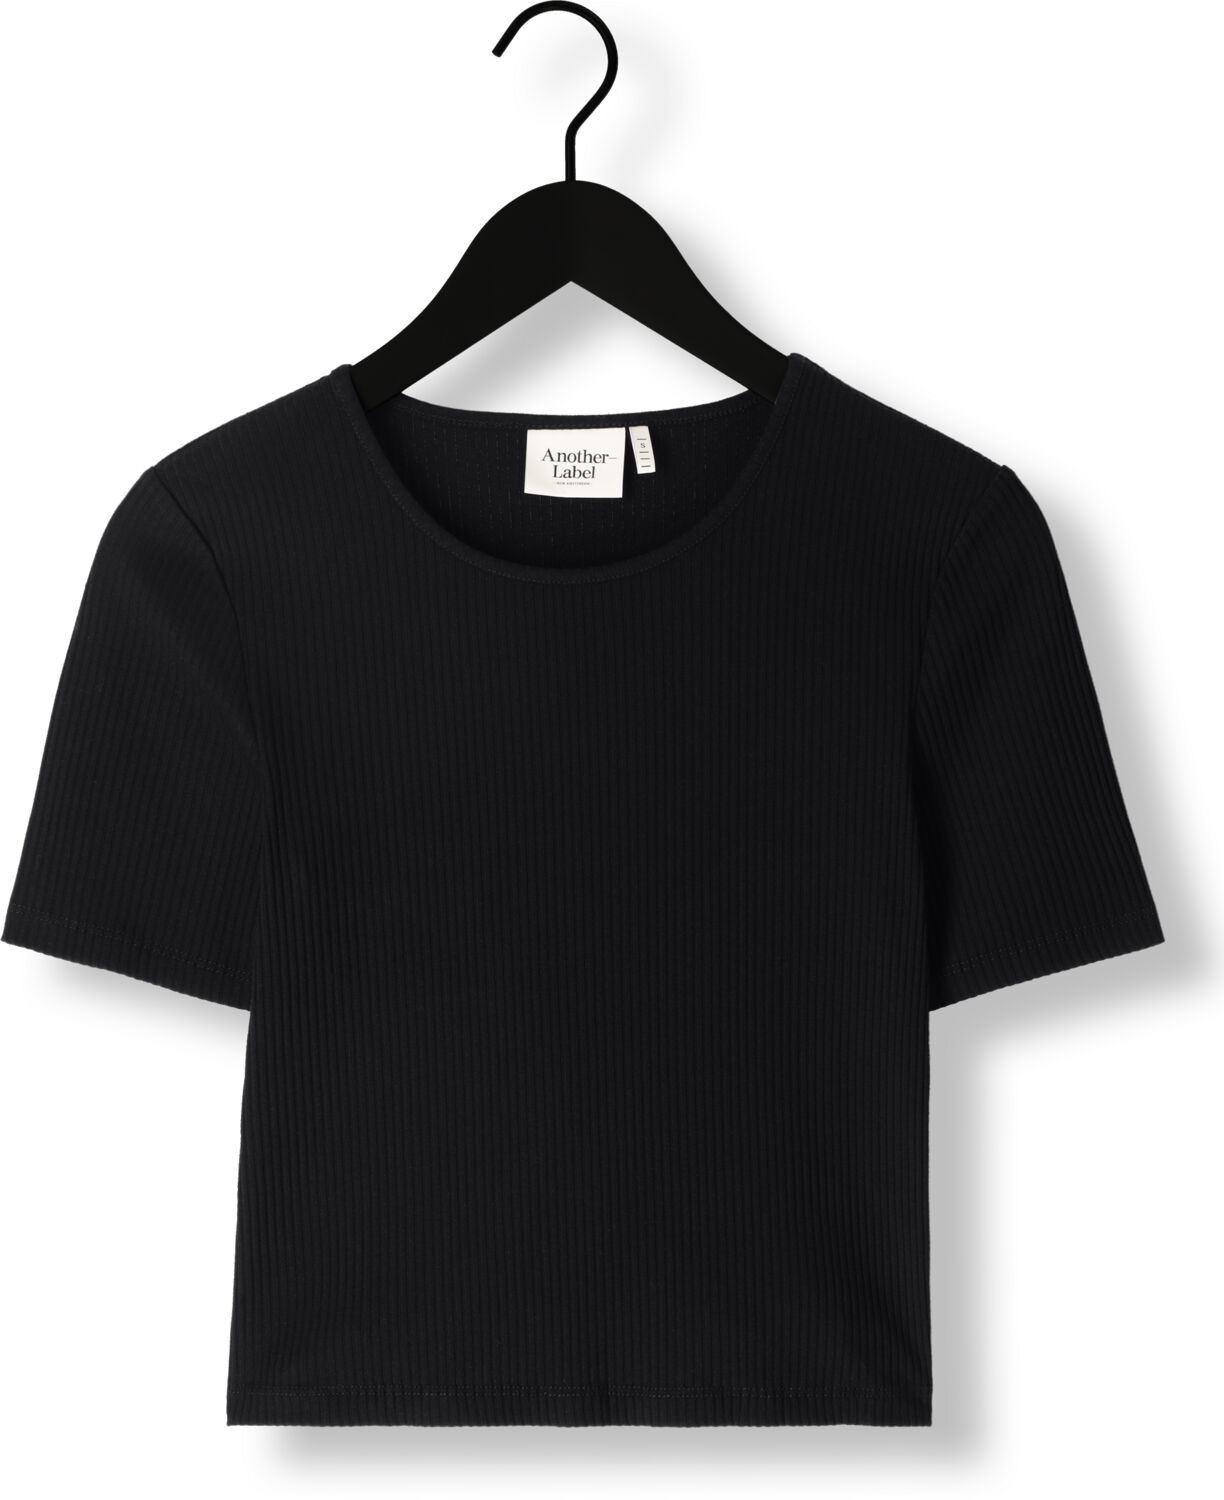 ANOTHER LABEL Dames Tops & T-shirts Elyne T-shirt S s Zwart